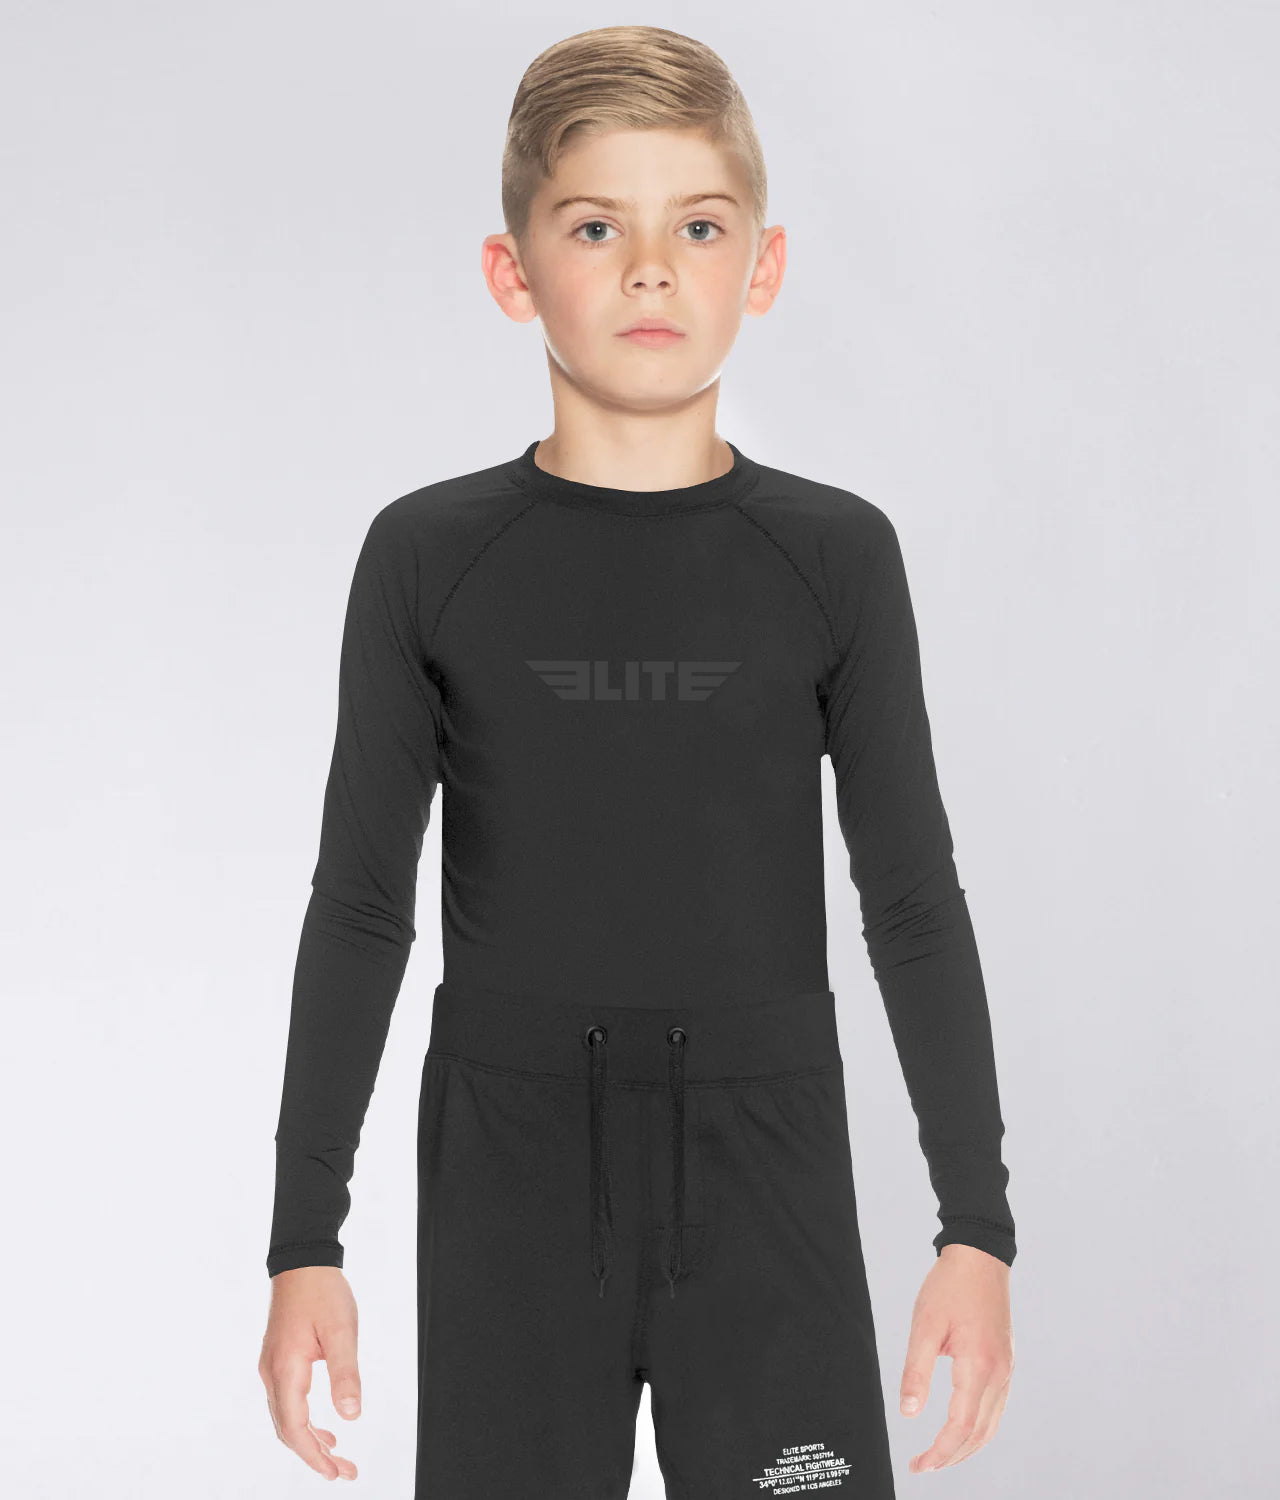 Elite Sports Kids' Standard Black Long Sleeve BJJ Rash Guard